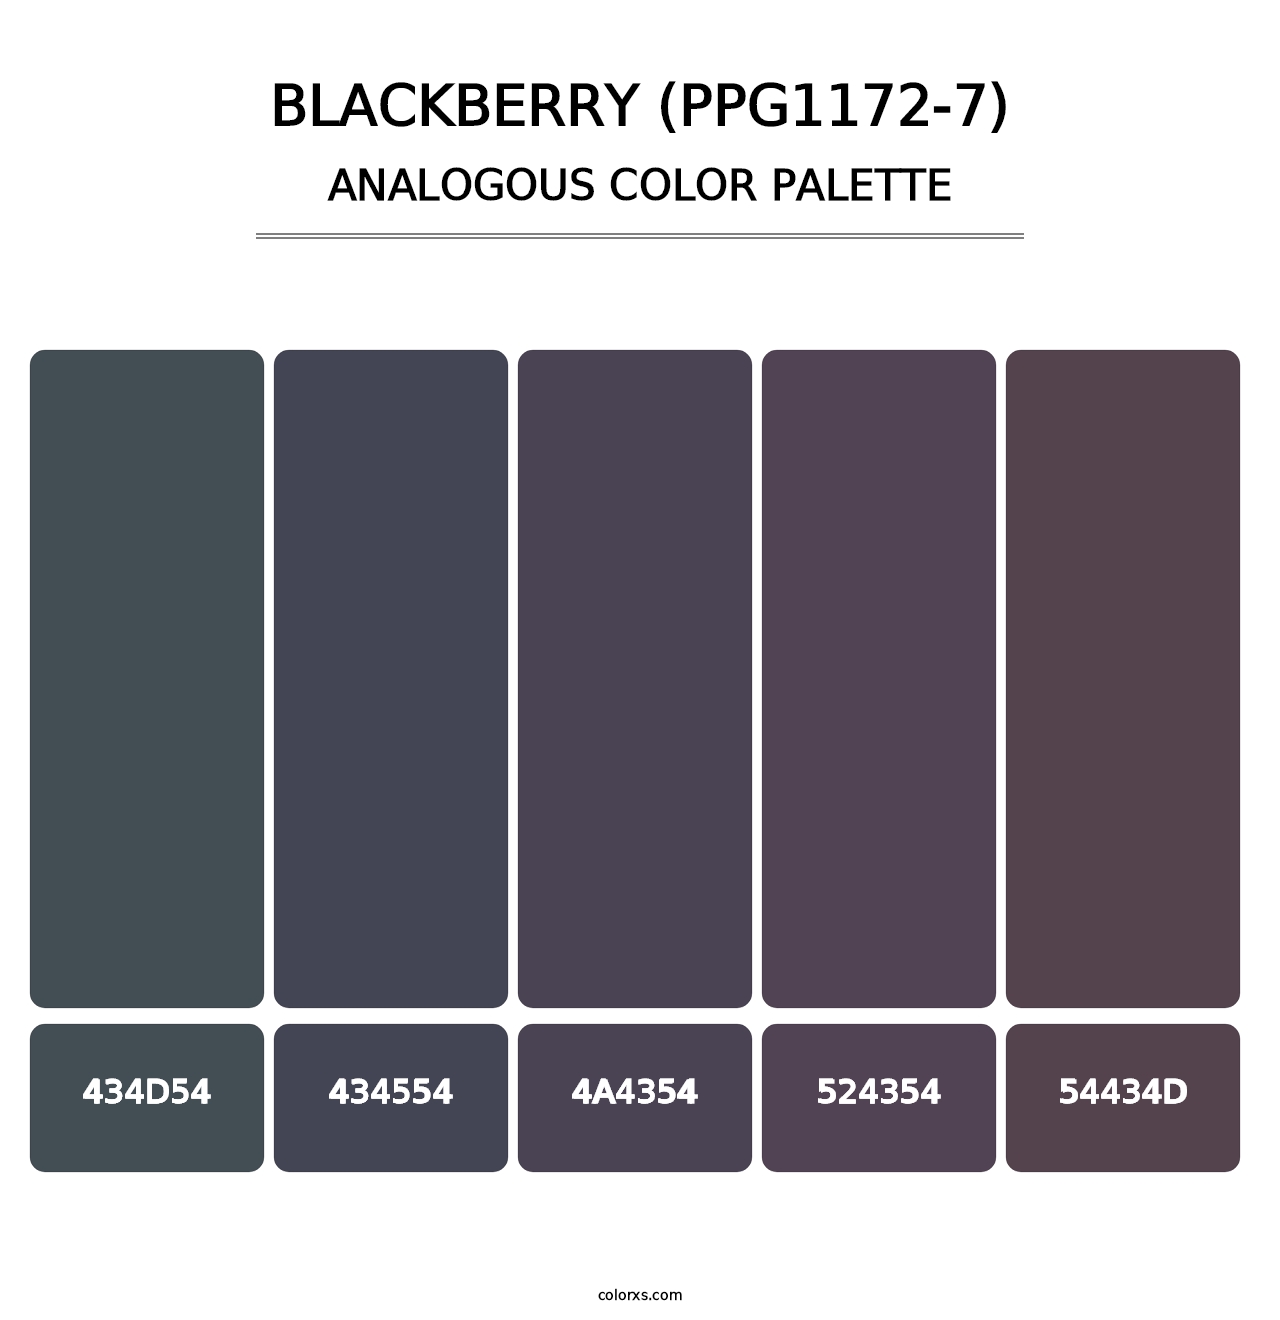 Blackberry (PPG1172-7) - Analogous Color Palette